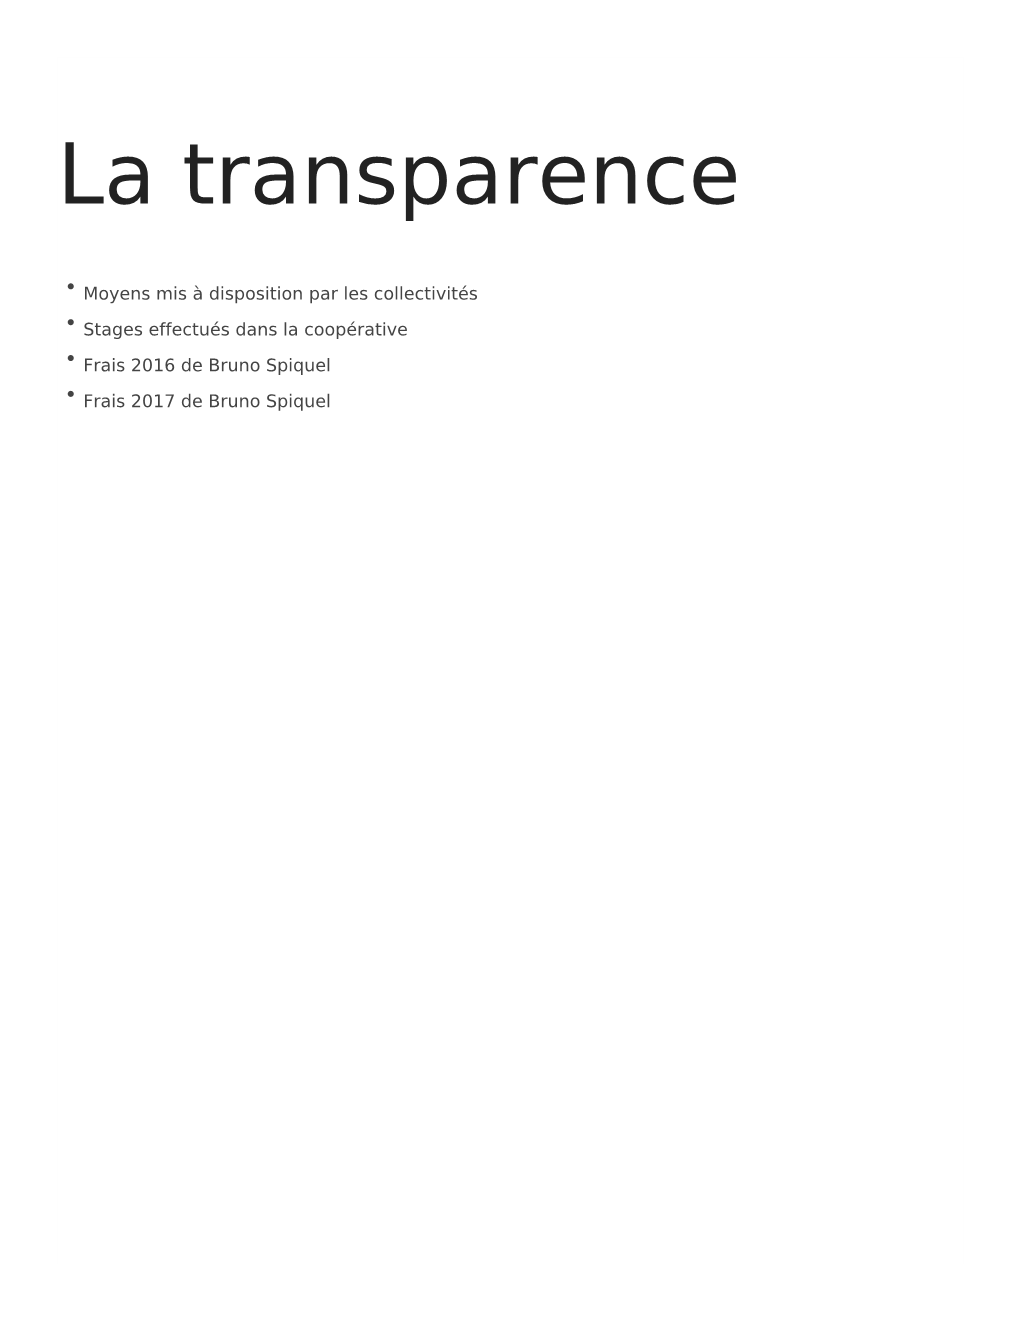 La Transparence